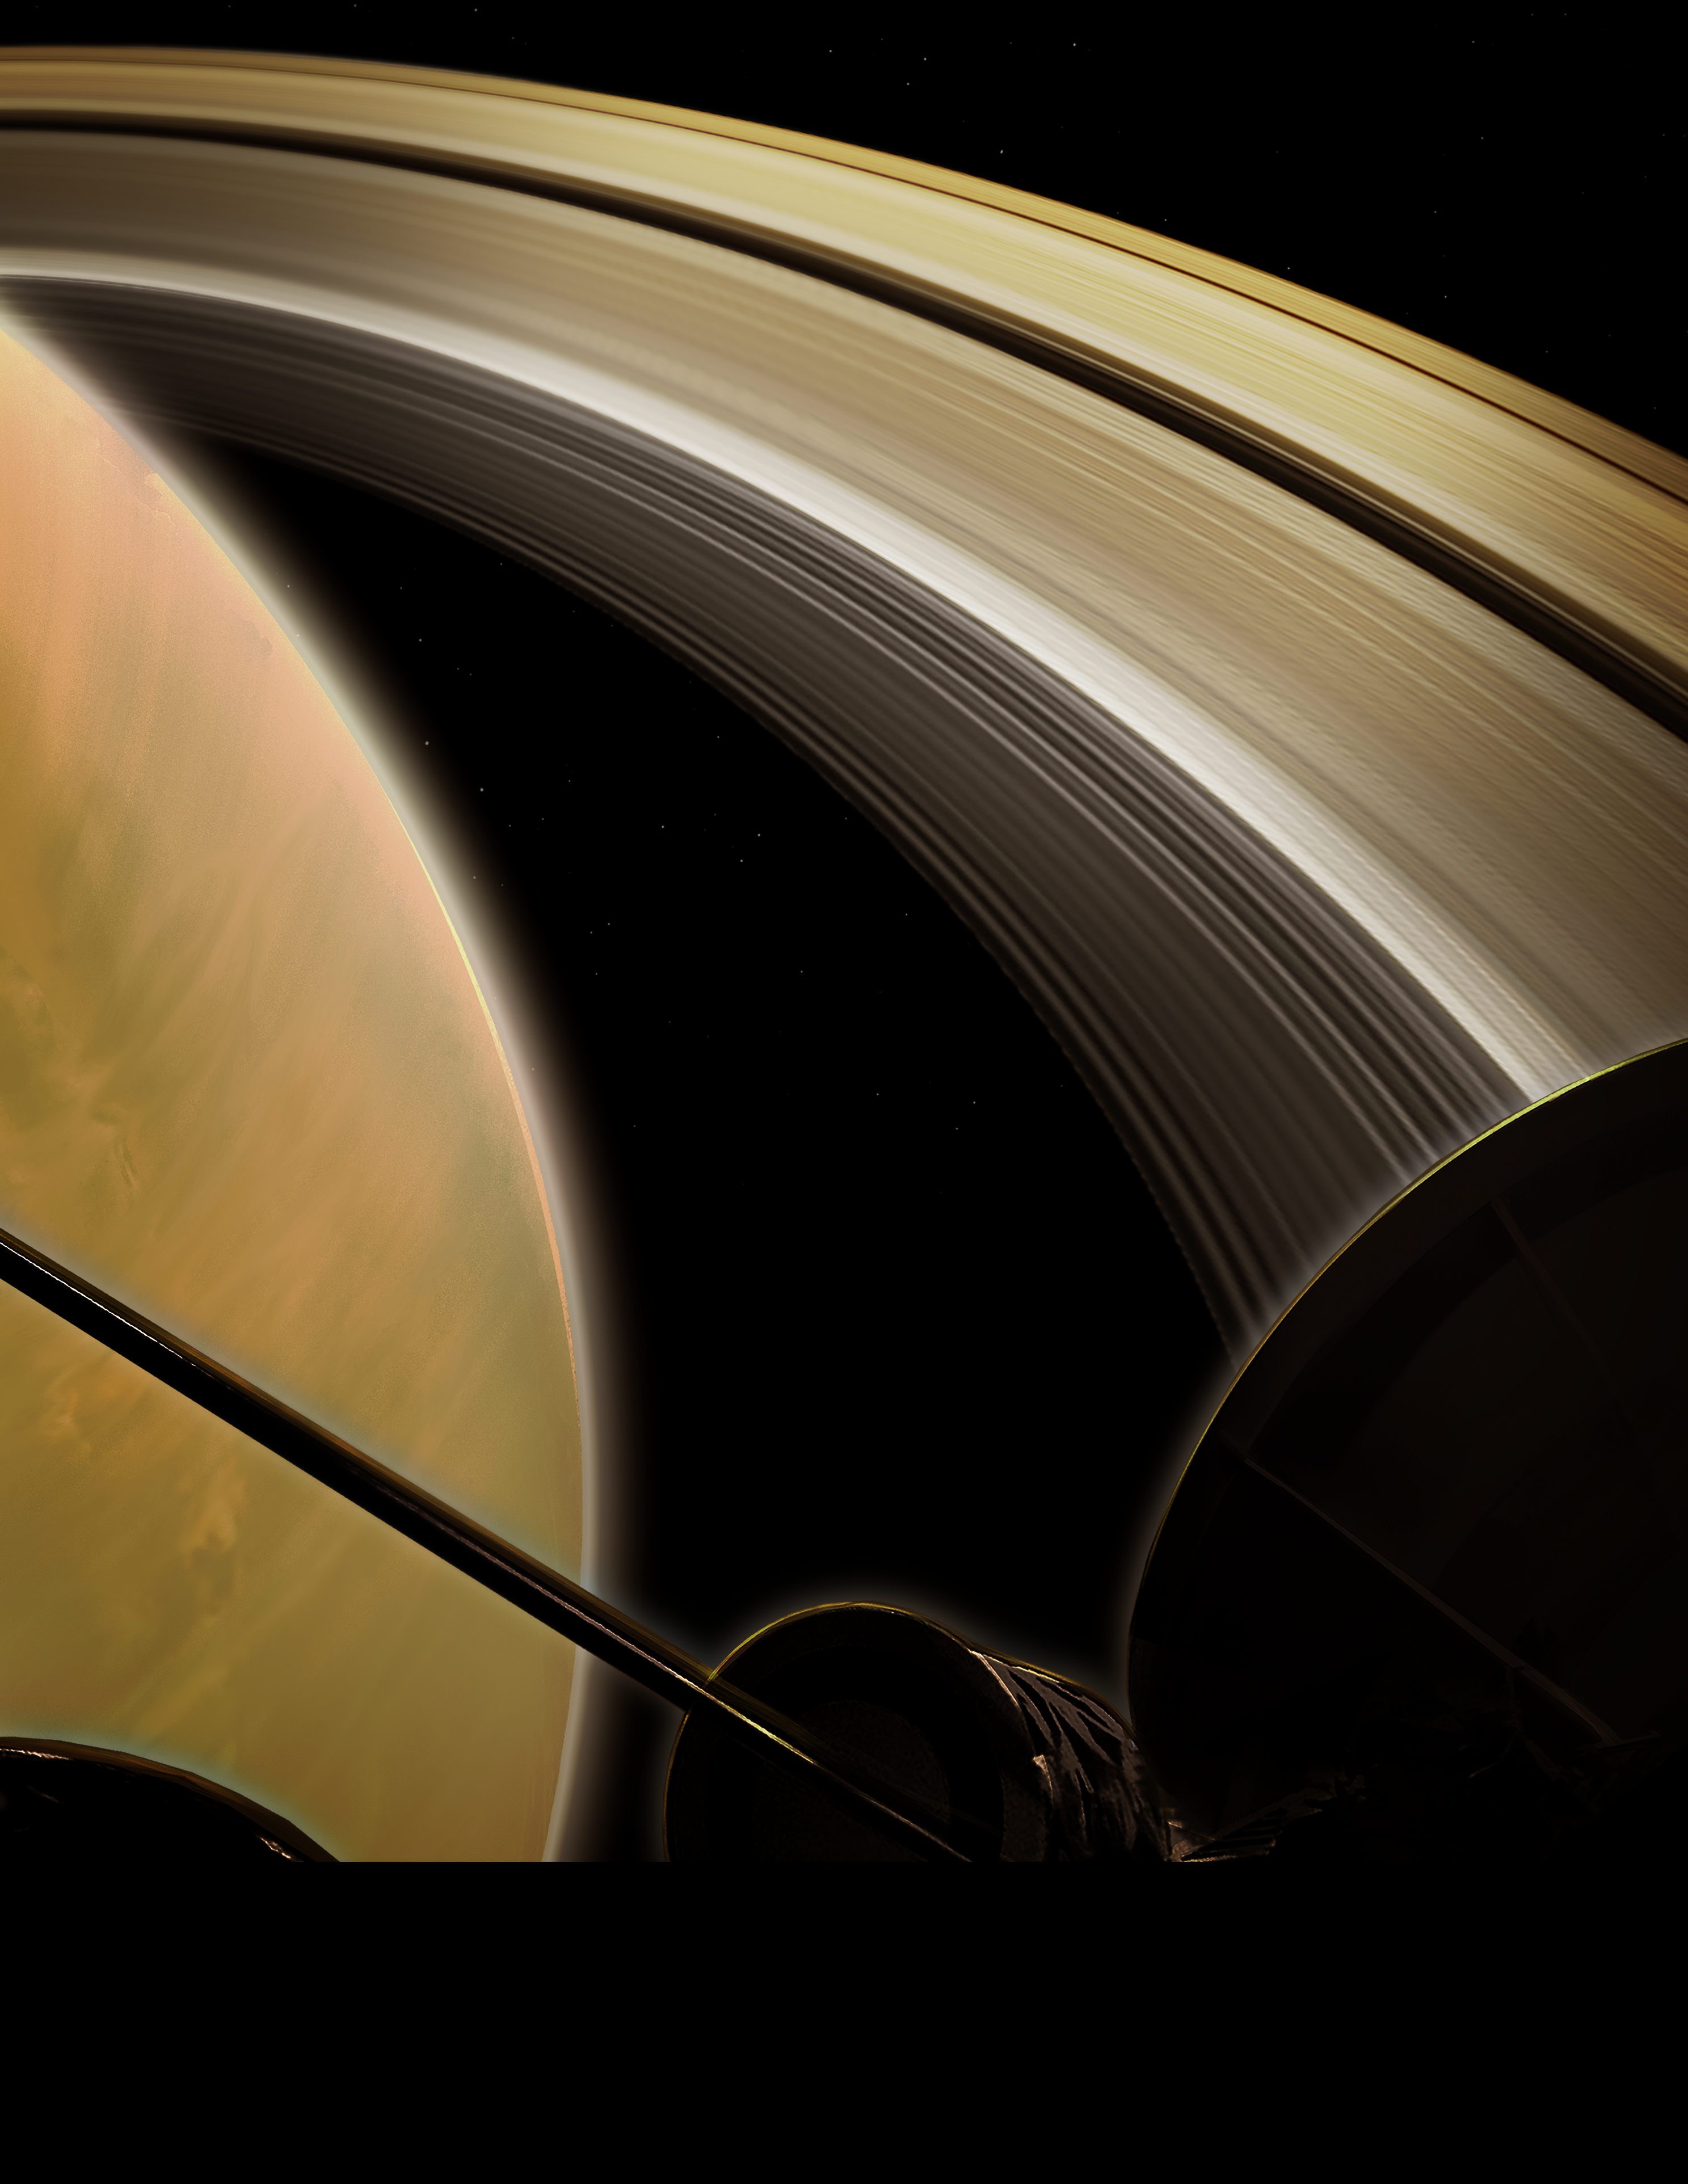 Illustration of spacecraft over Saturn.